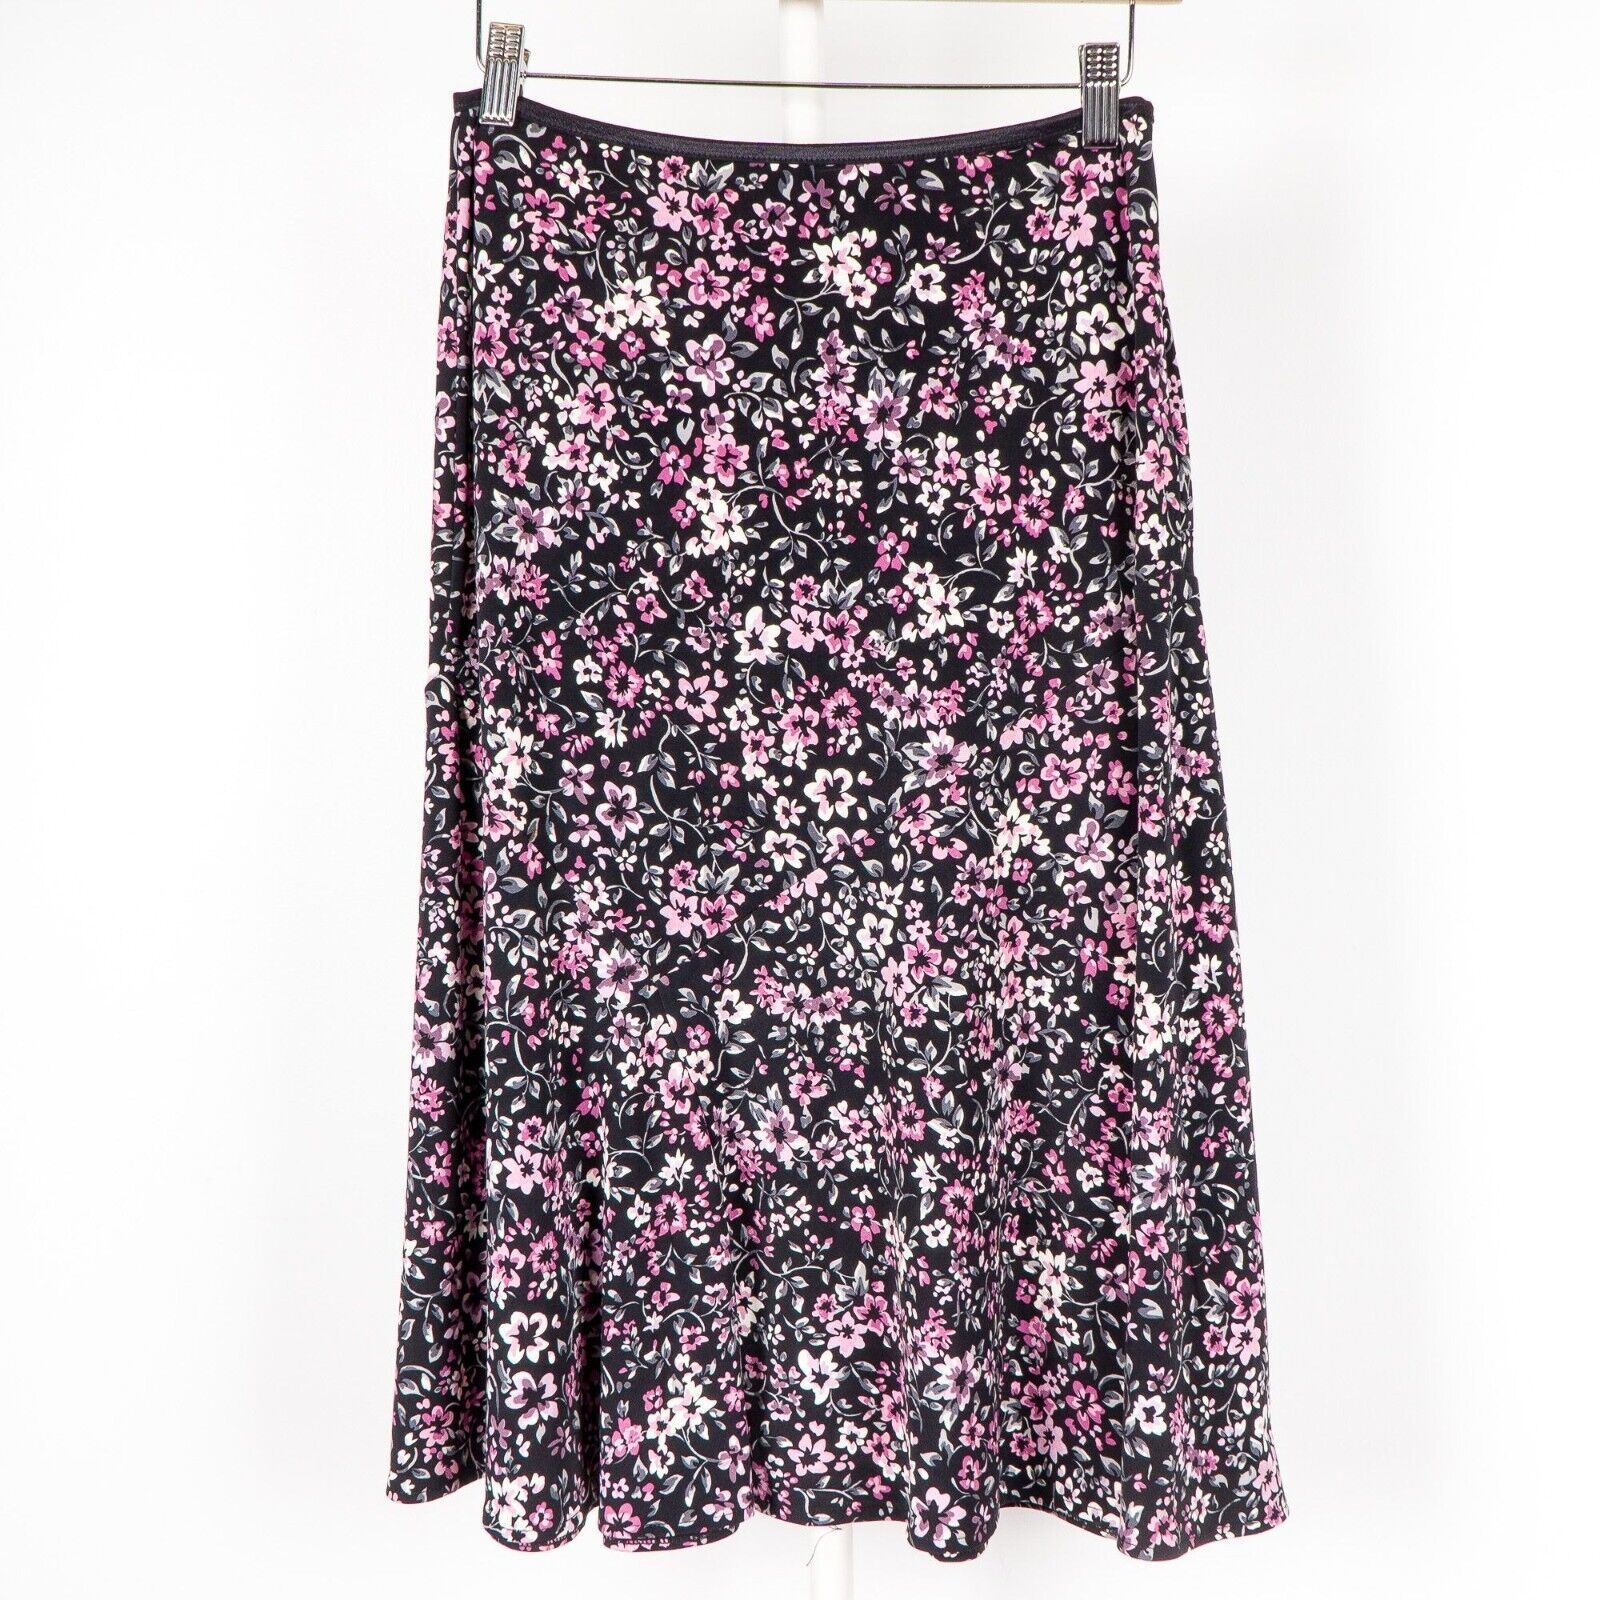 Primary image for Casual Corner Annex Skirt Women S Petite Floral Black Purple White Elastic Waist